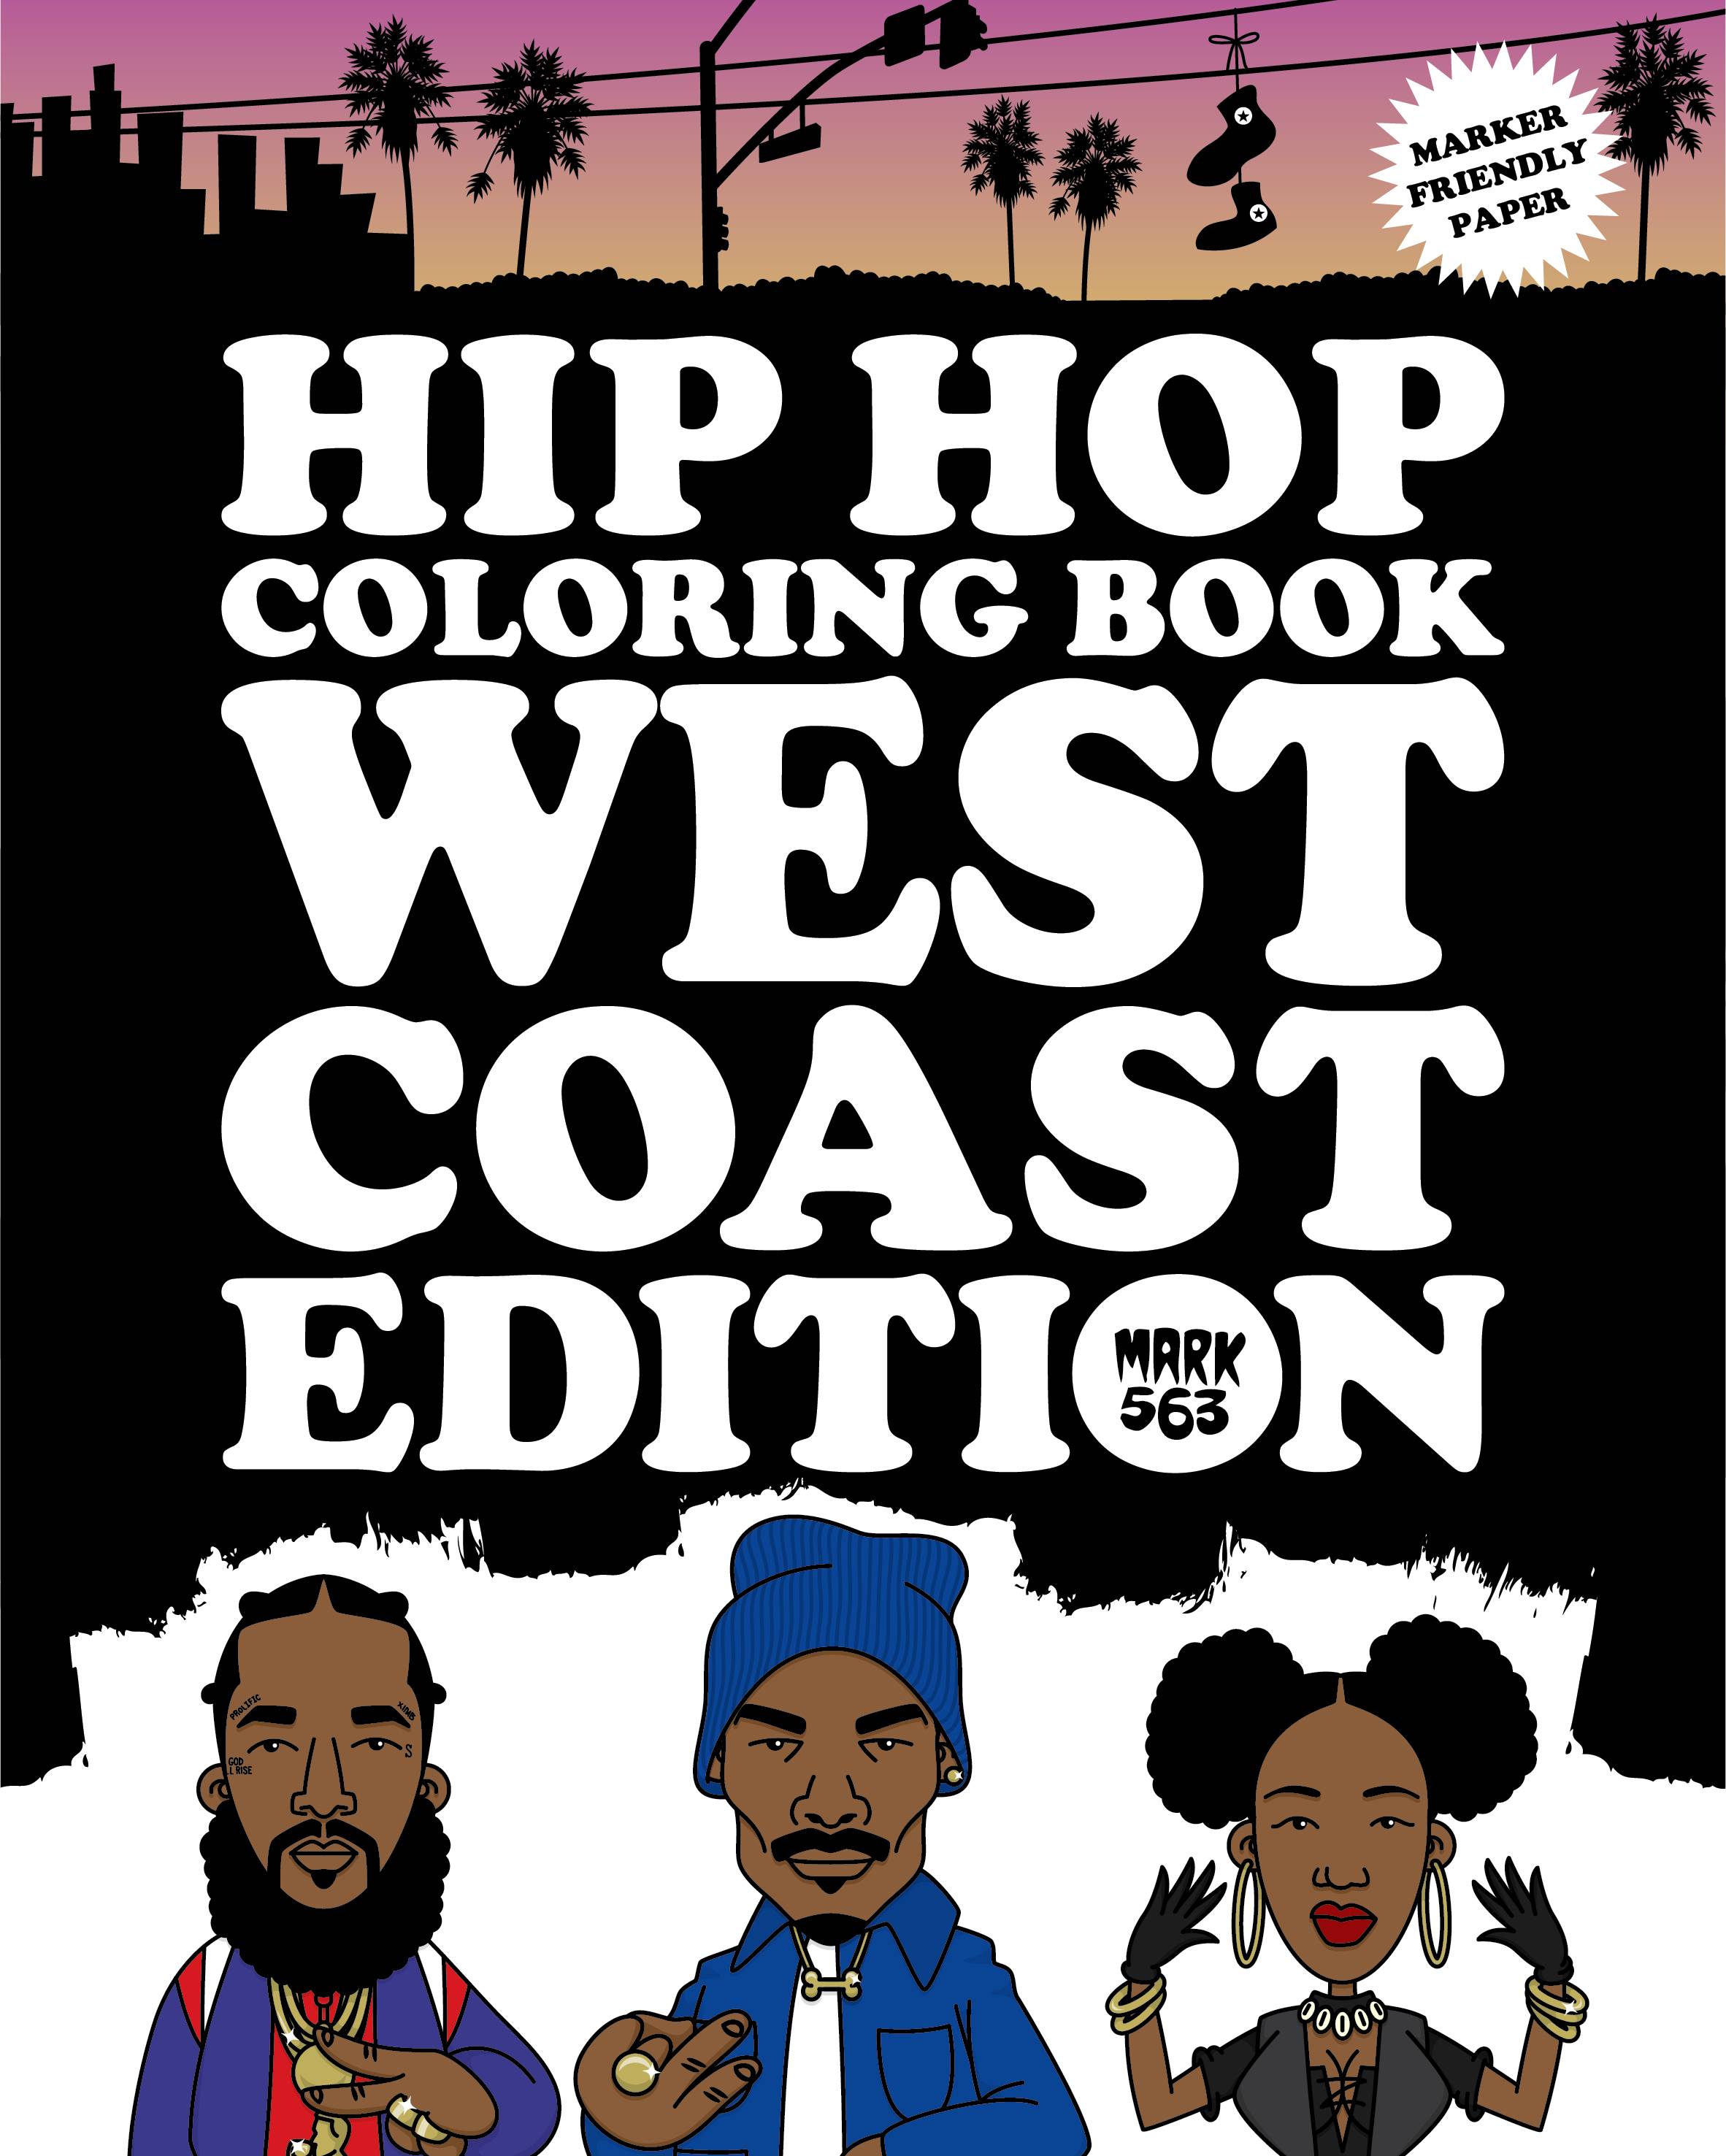 Hip Hop coloring book : West Coast Edition